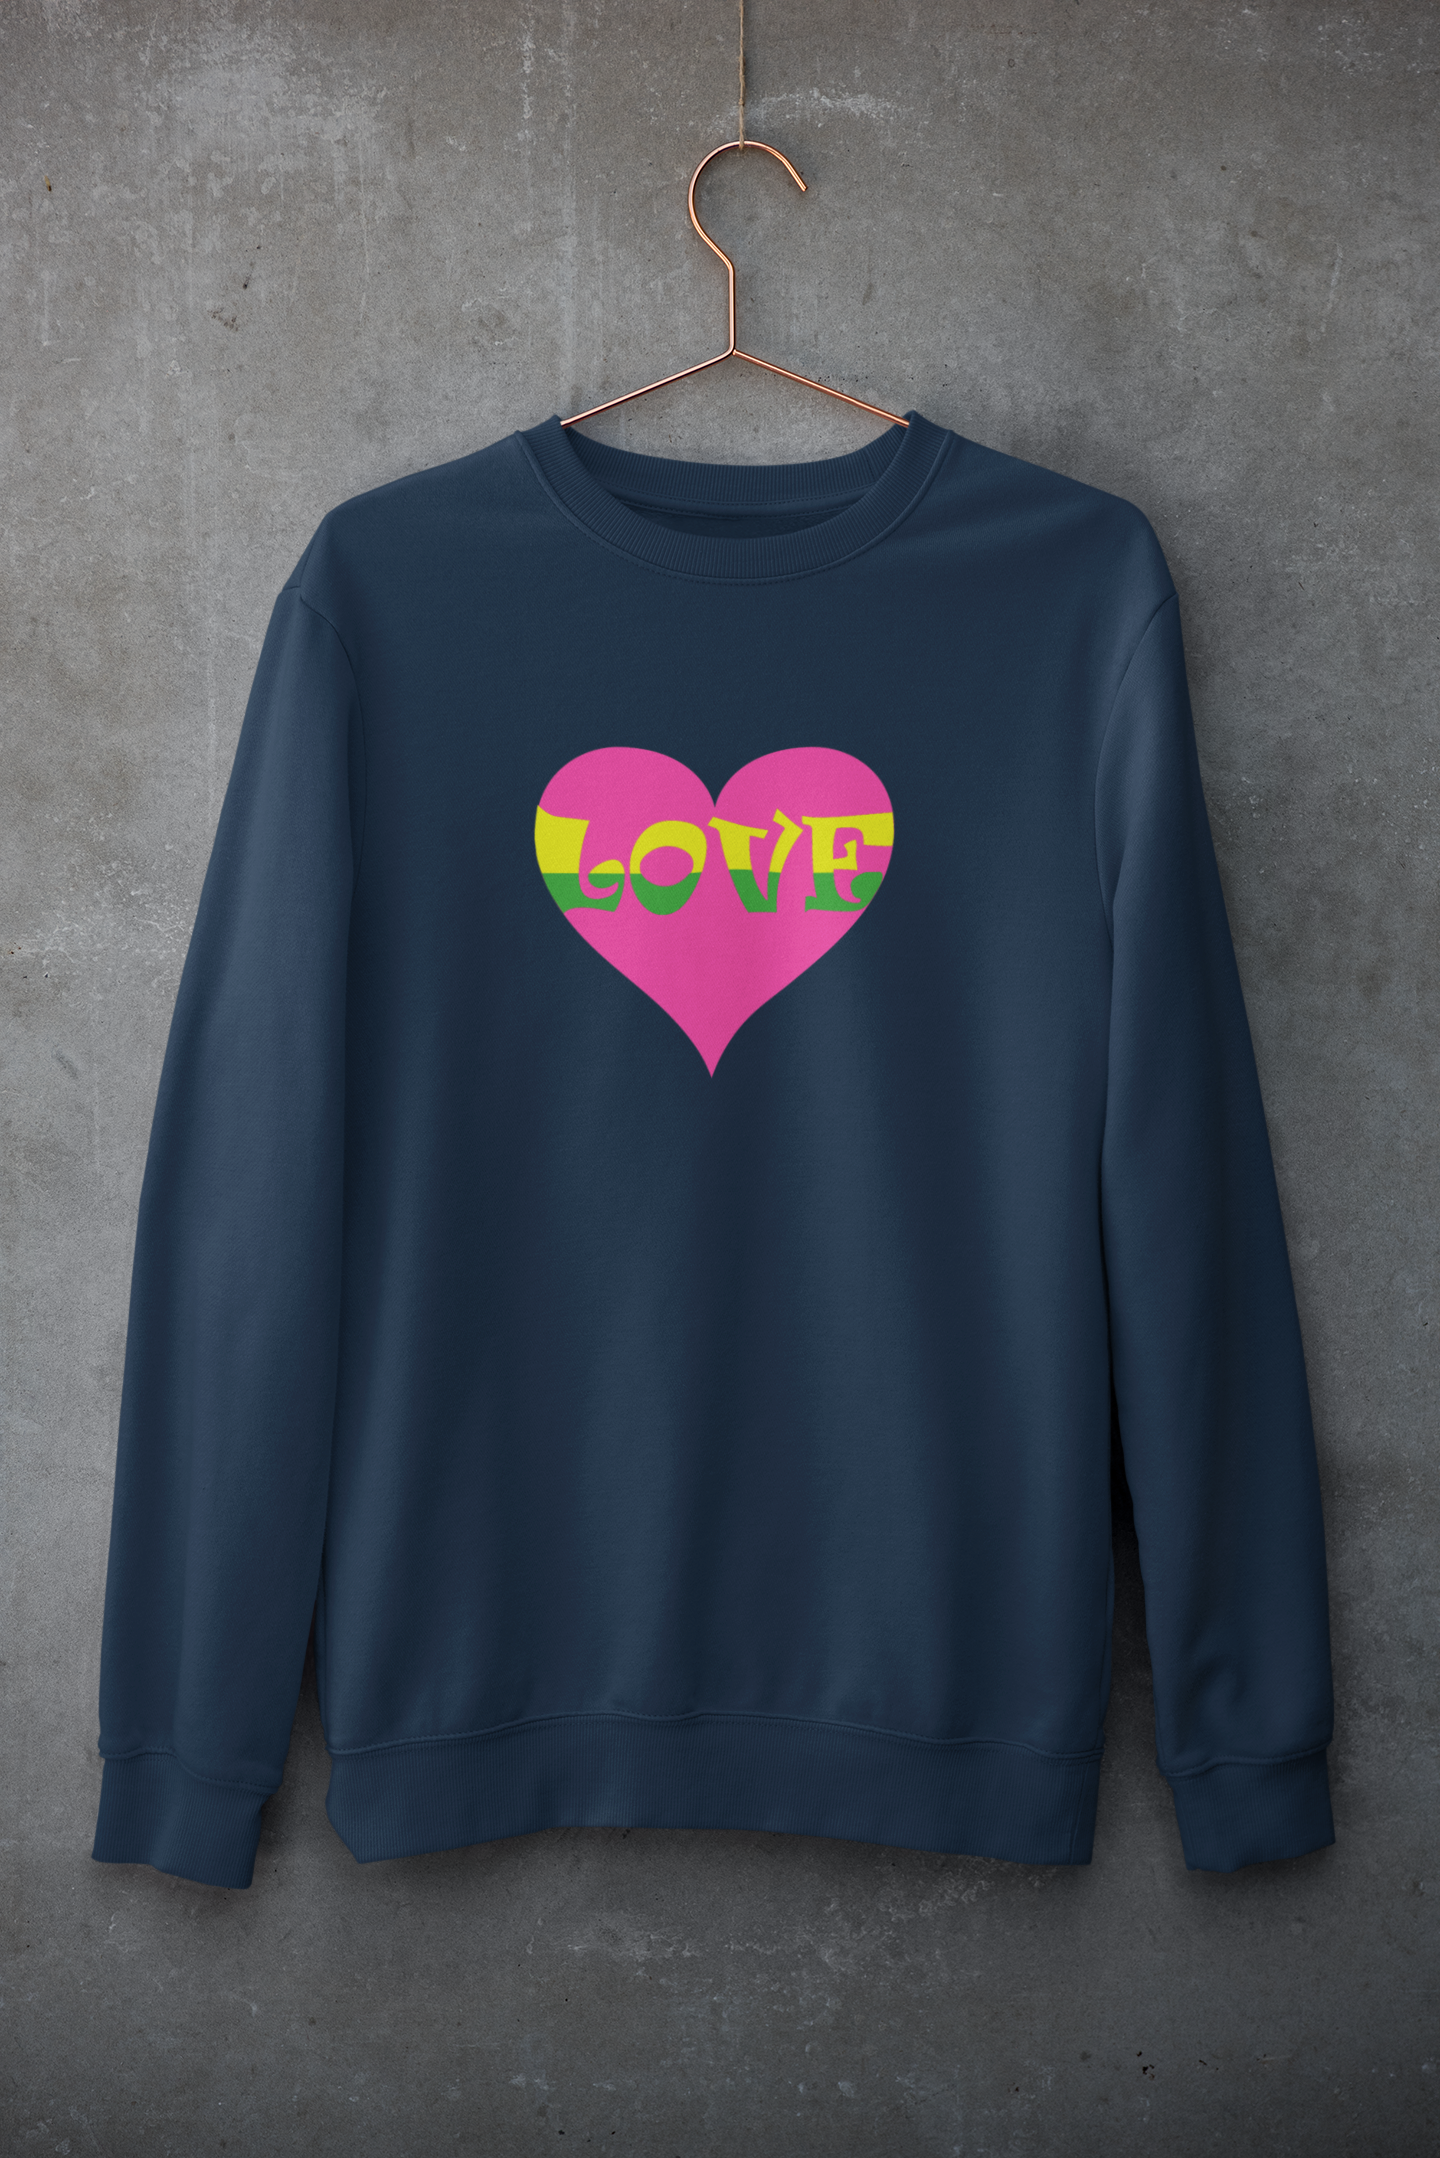 Women’s organic love sweatshirt Soft organic dark navy blue sweatshirt with a Fluorescent pink heart with contrasting LOVE.   85% Soft organic cotton, 15% recycled polyester